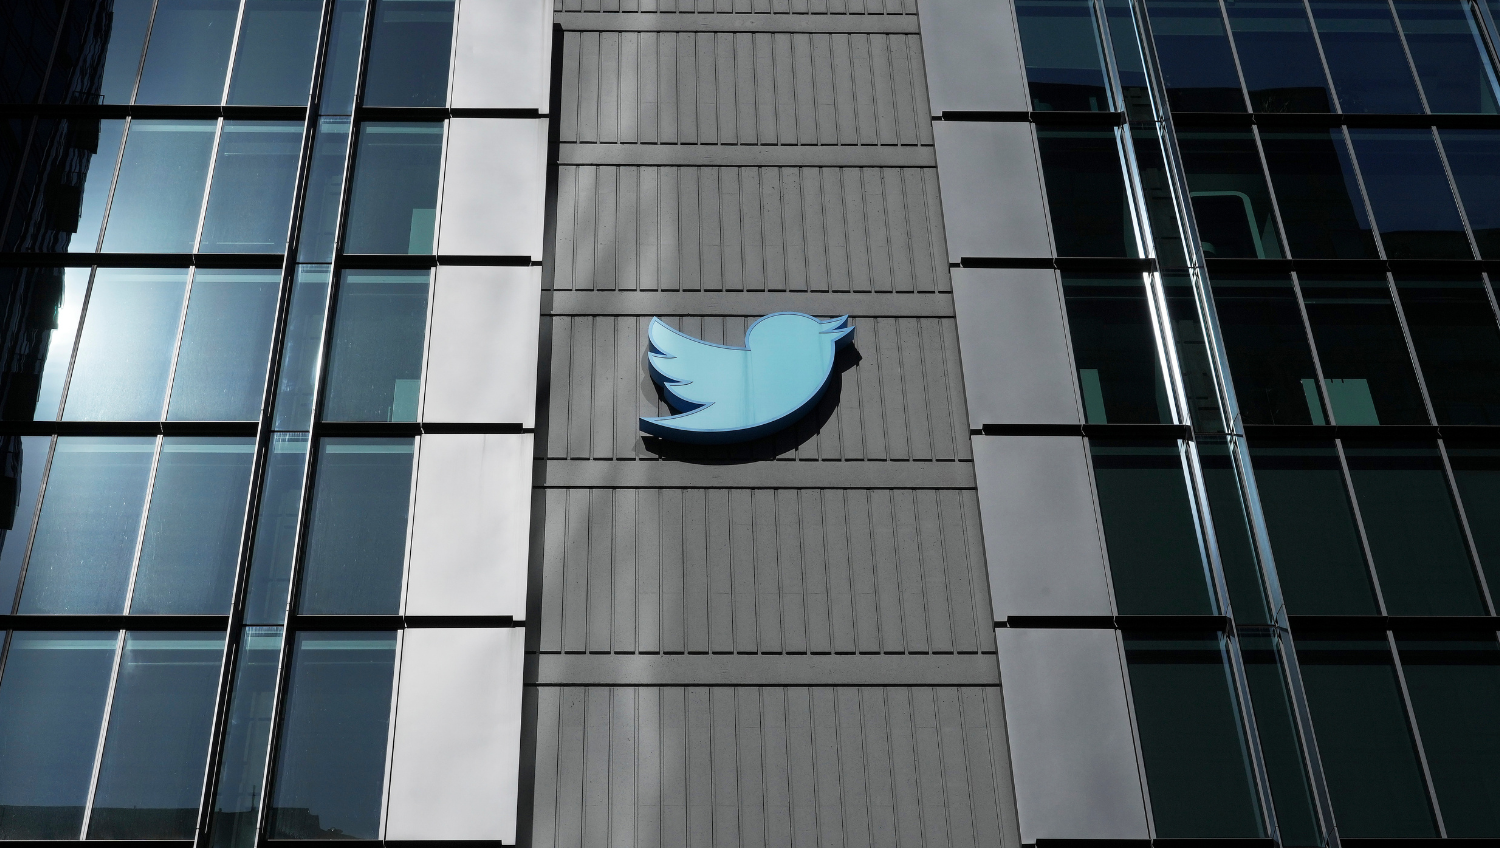 La sede de Twitter en San Francisco, el 24 de abril de 2022. (Foto Prensa Libre: Jim Wilson/The New York Times)